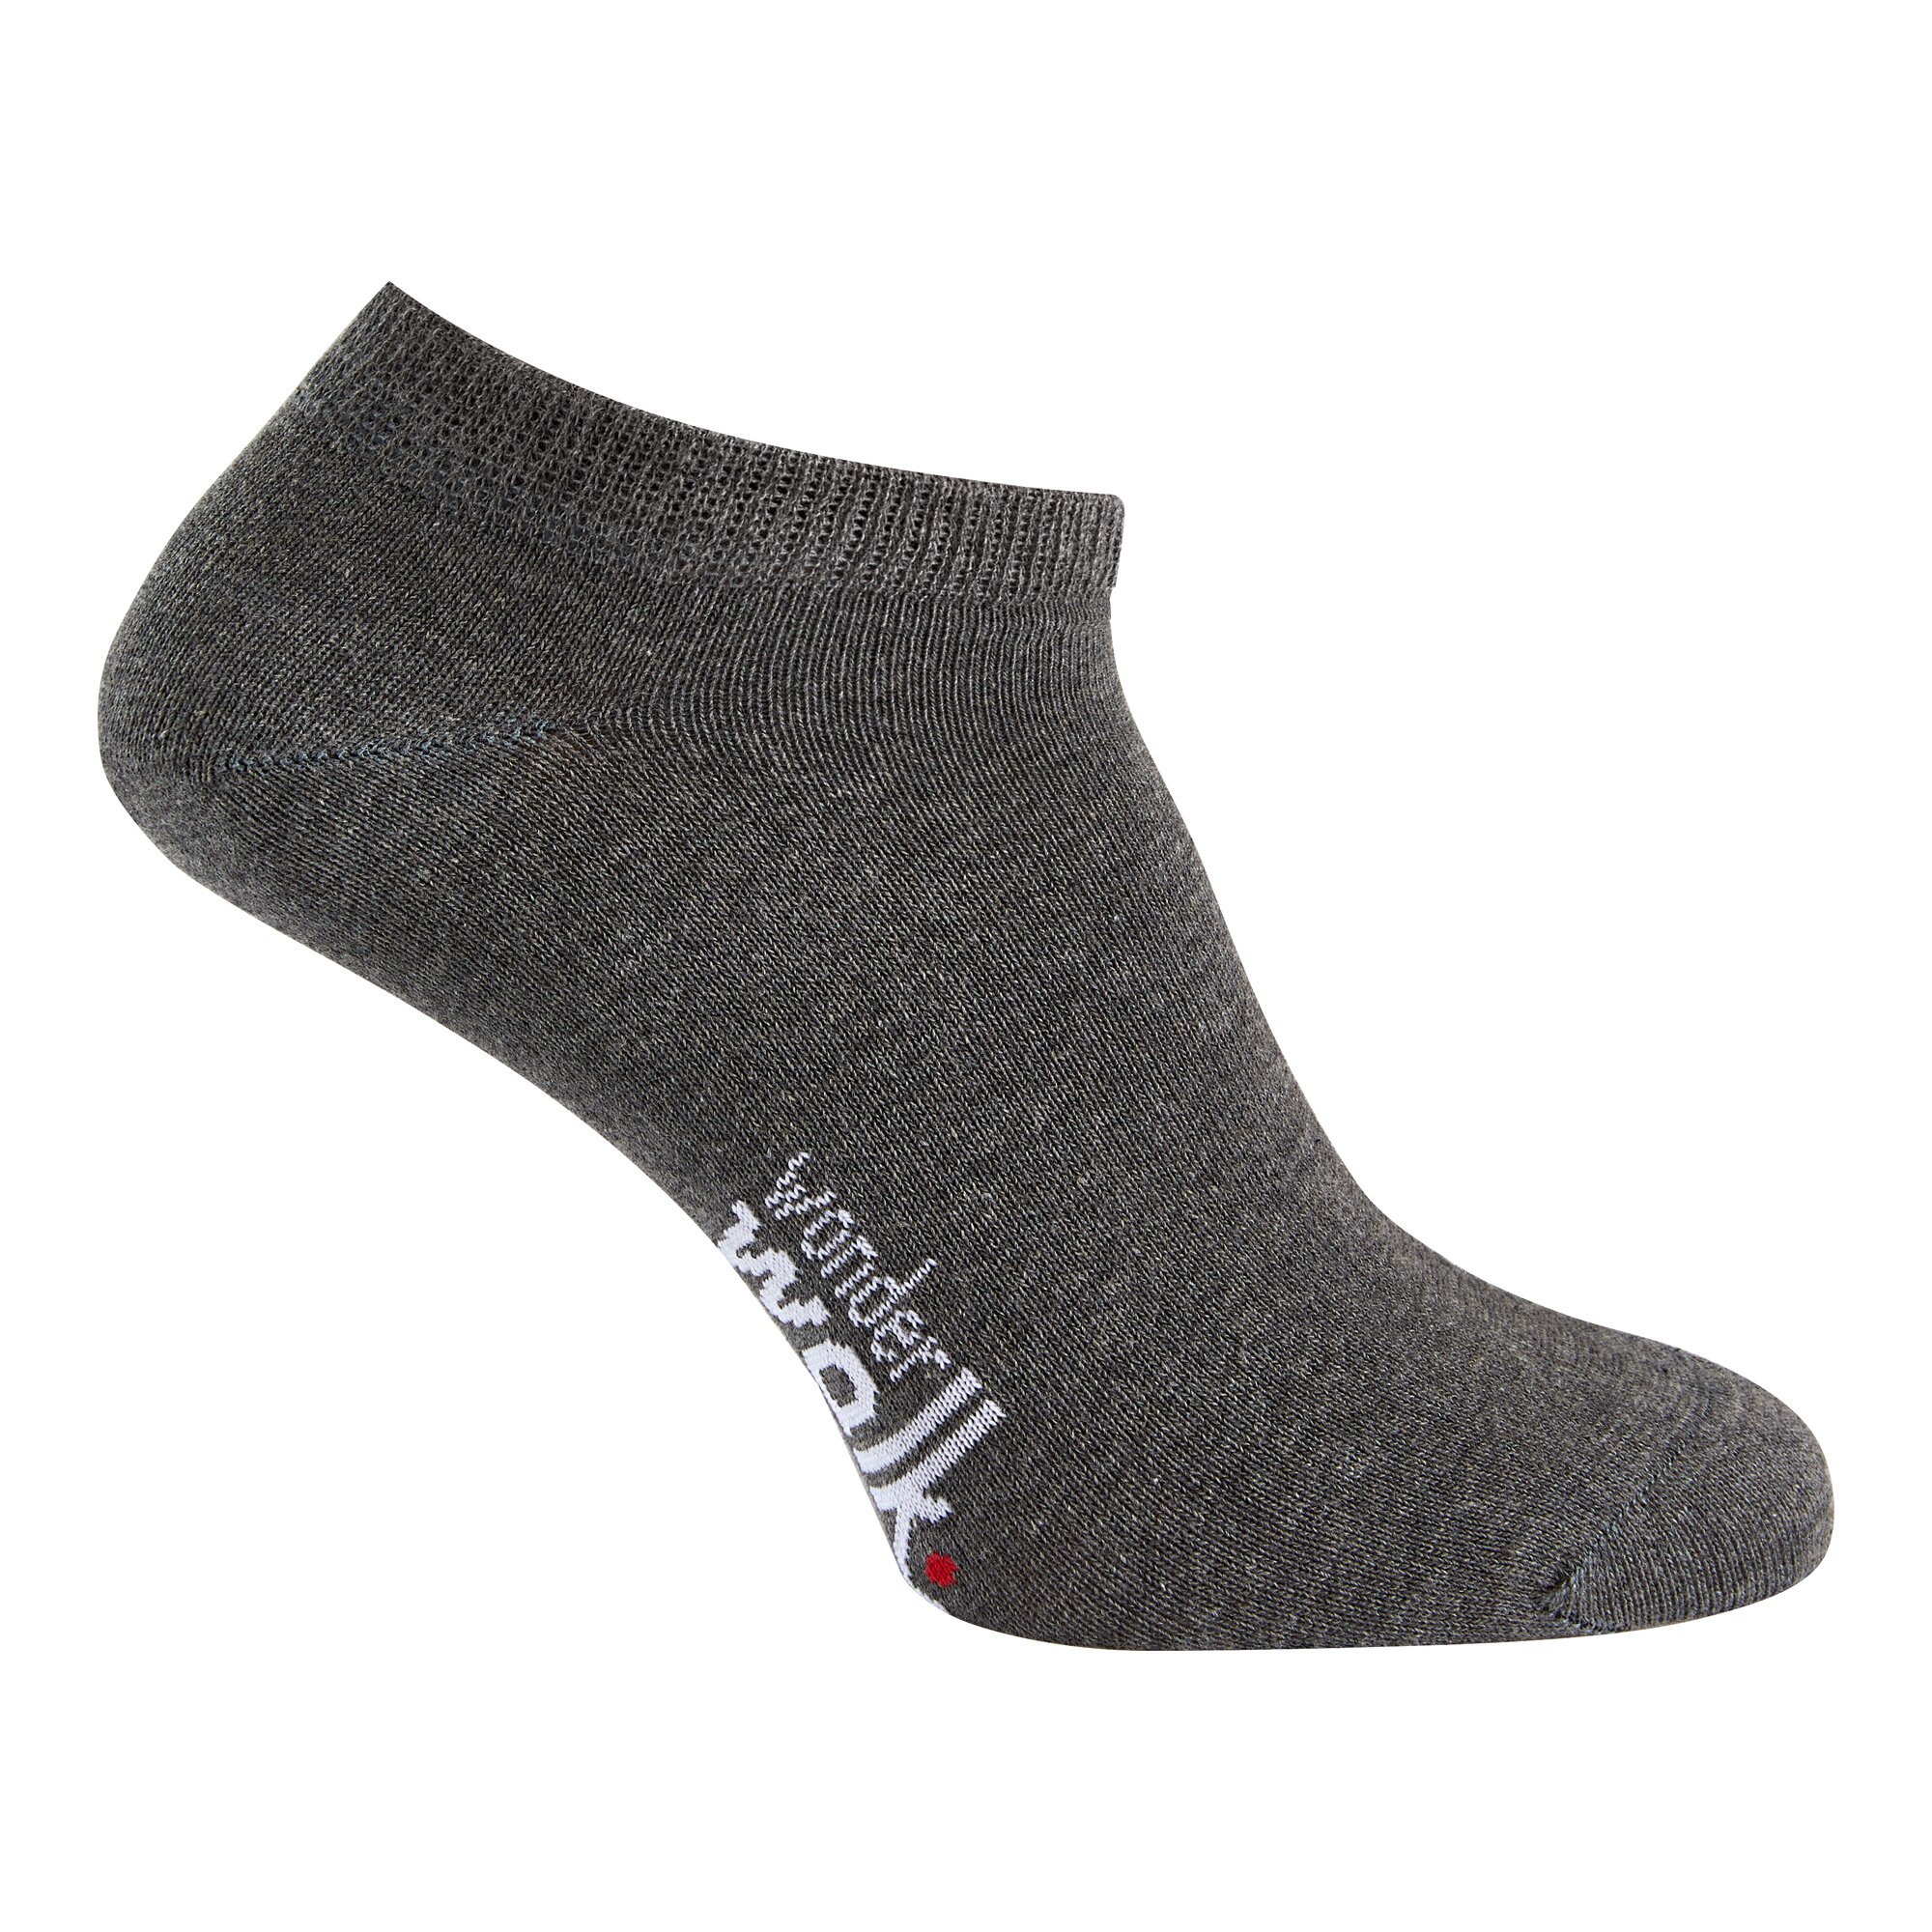 Sneaker-Socken Antigeruch, 2 Paar, Größe: 43, grau